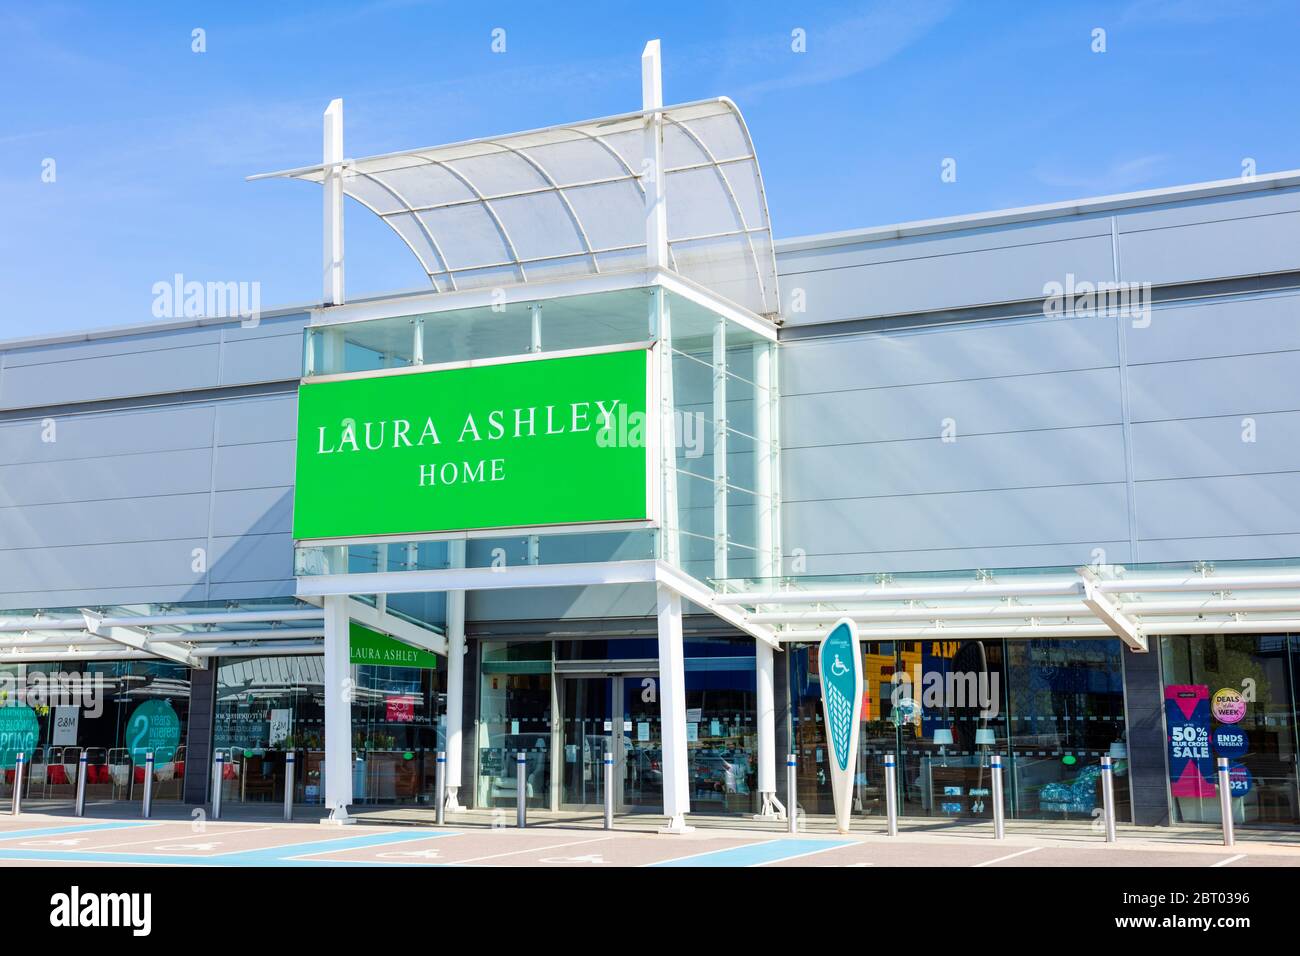 Laura Ashley home store front Giltbrook Retail Park, Ikea Way, Giltbrook,Nottingham East Midlands England UK GB Europe Stock Photo